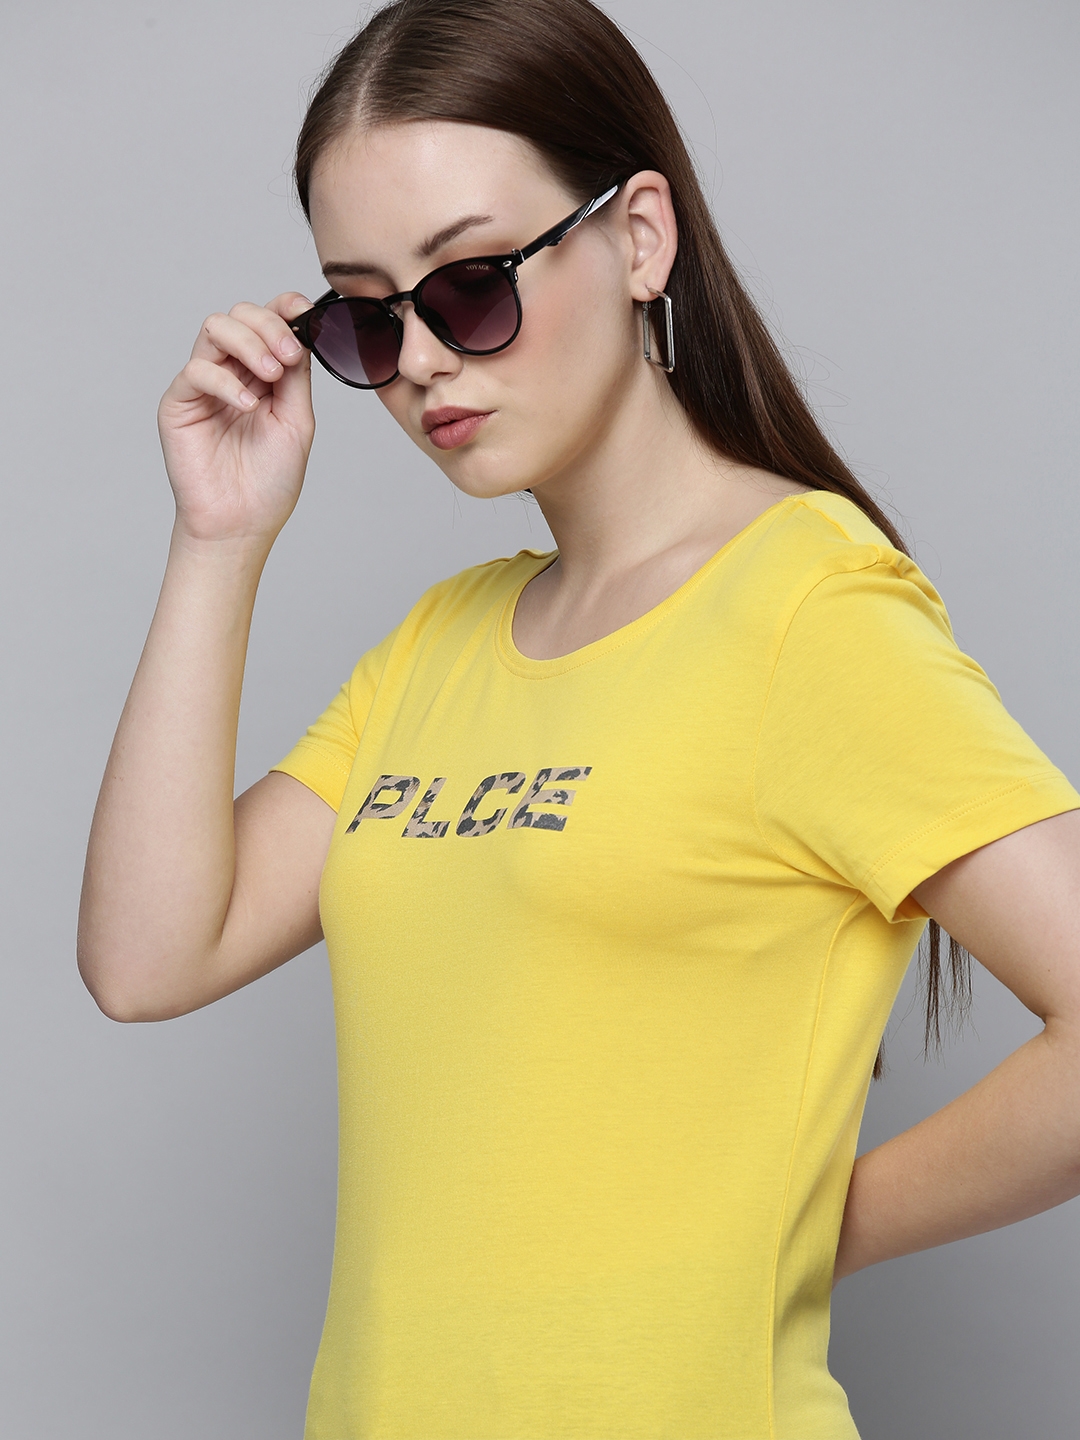 883 Police | 883 Police Women's Yellow Round Neck T-Shirt